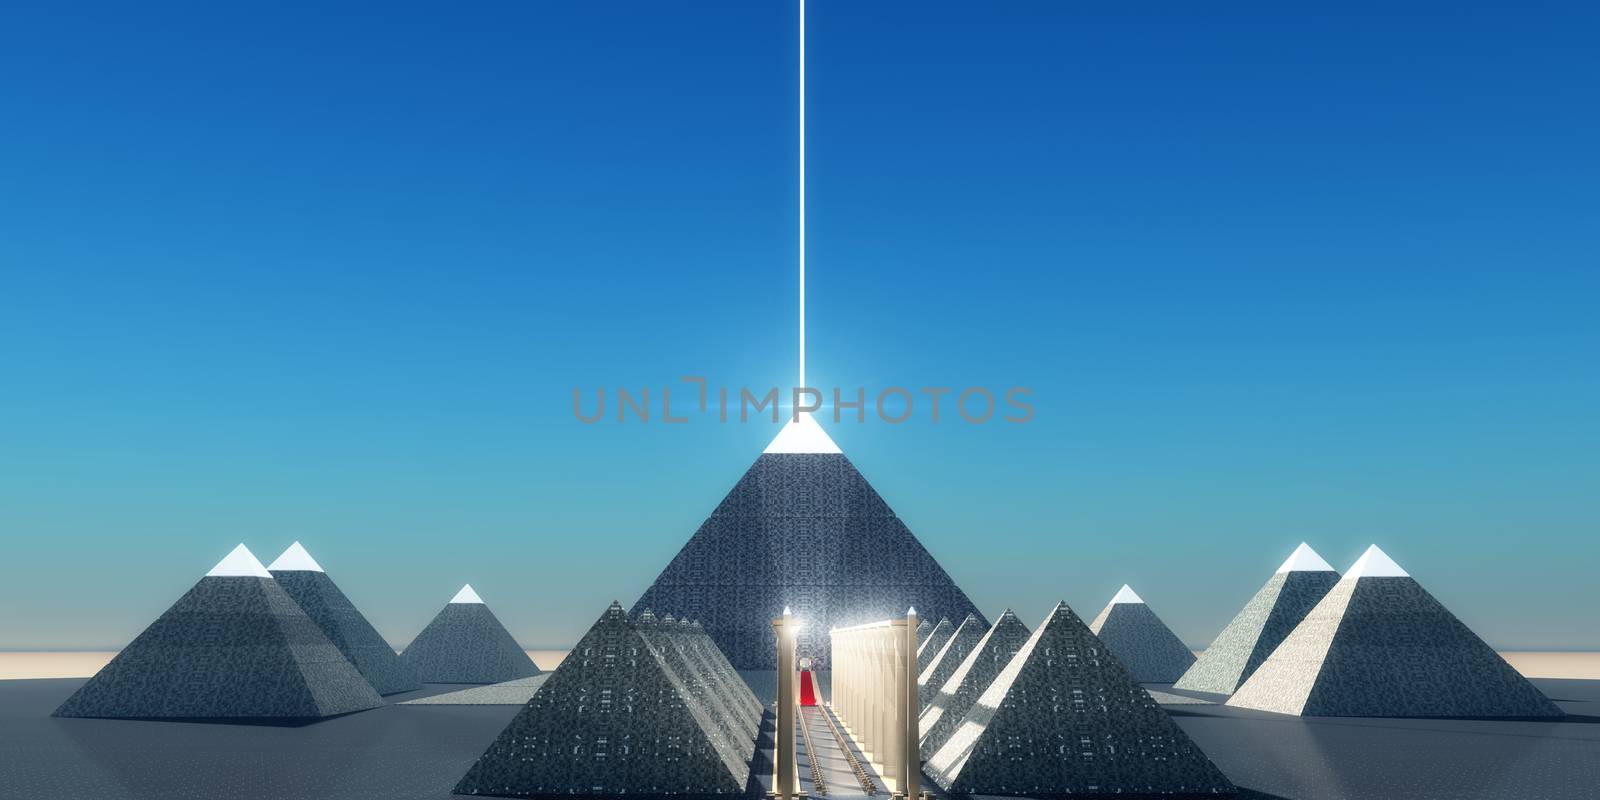 Egyptian Cosmic Pyramids by Catmando